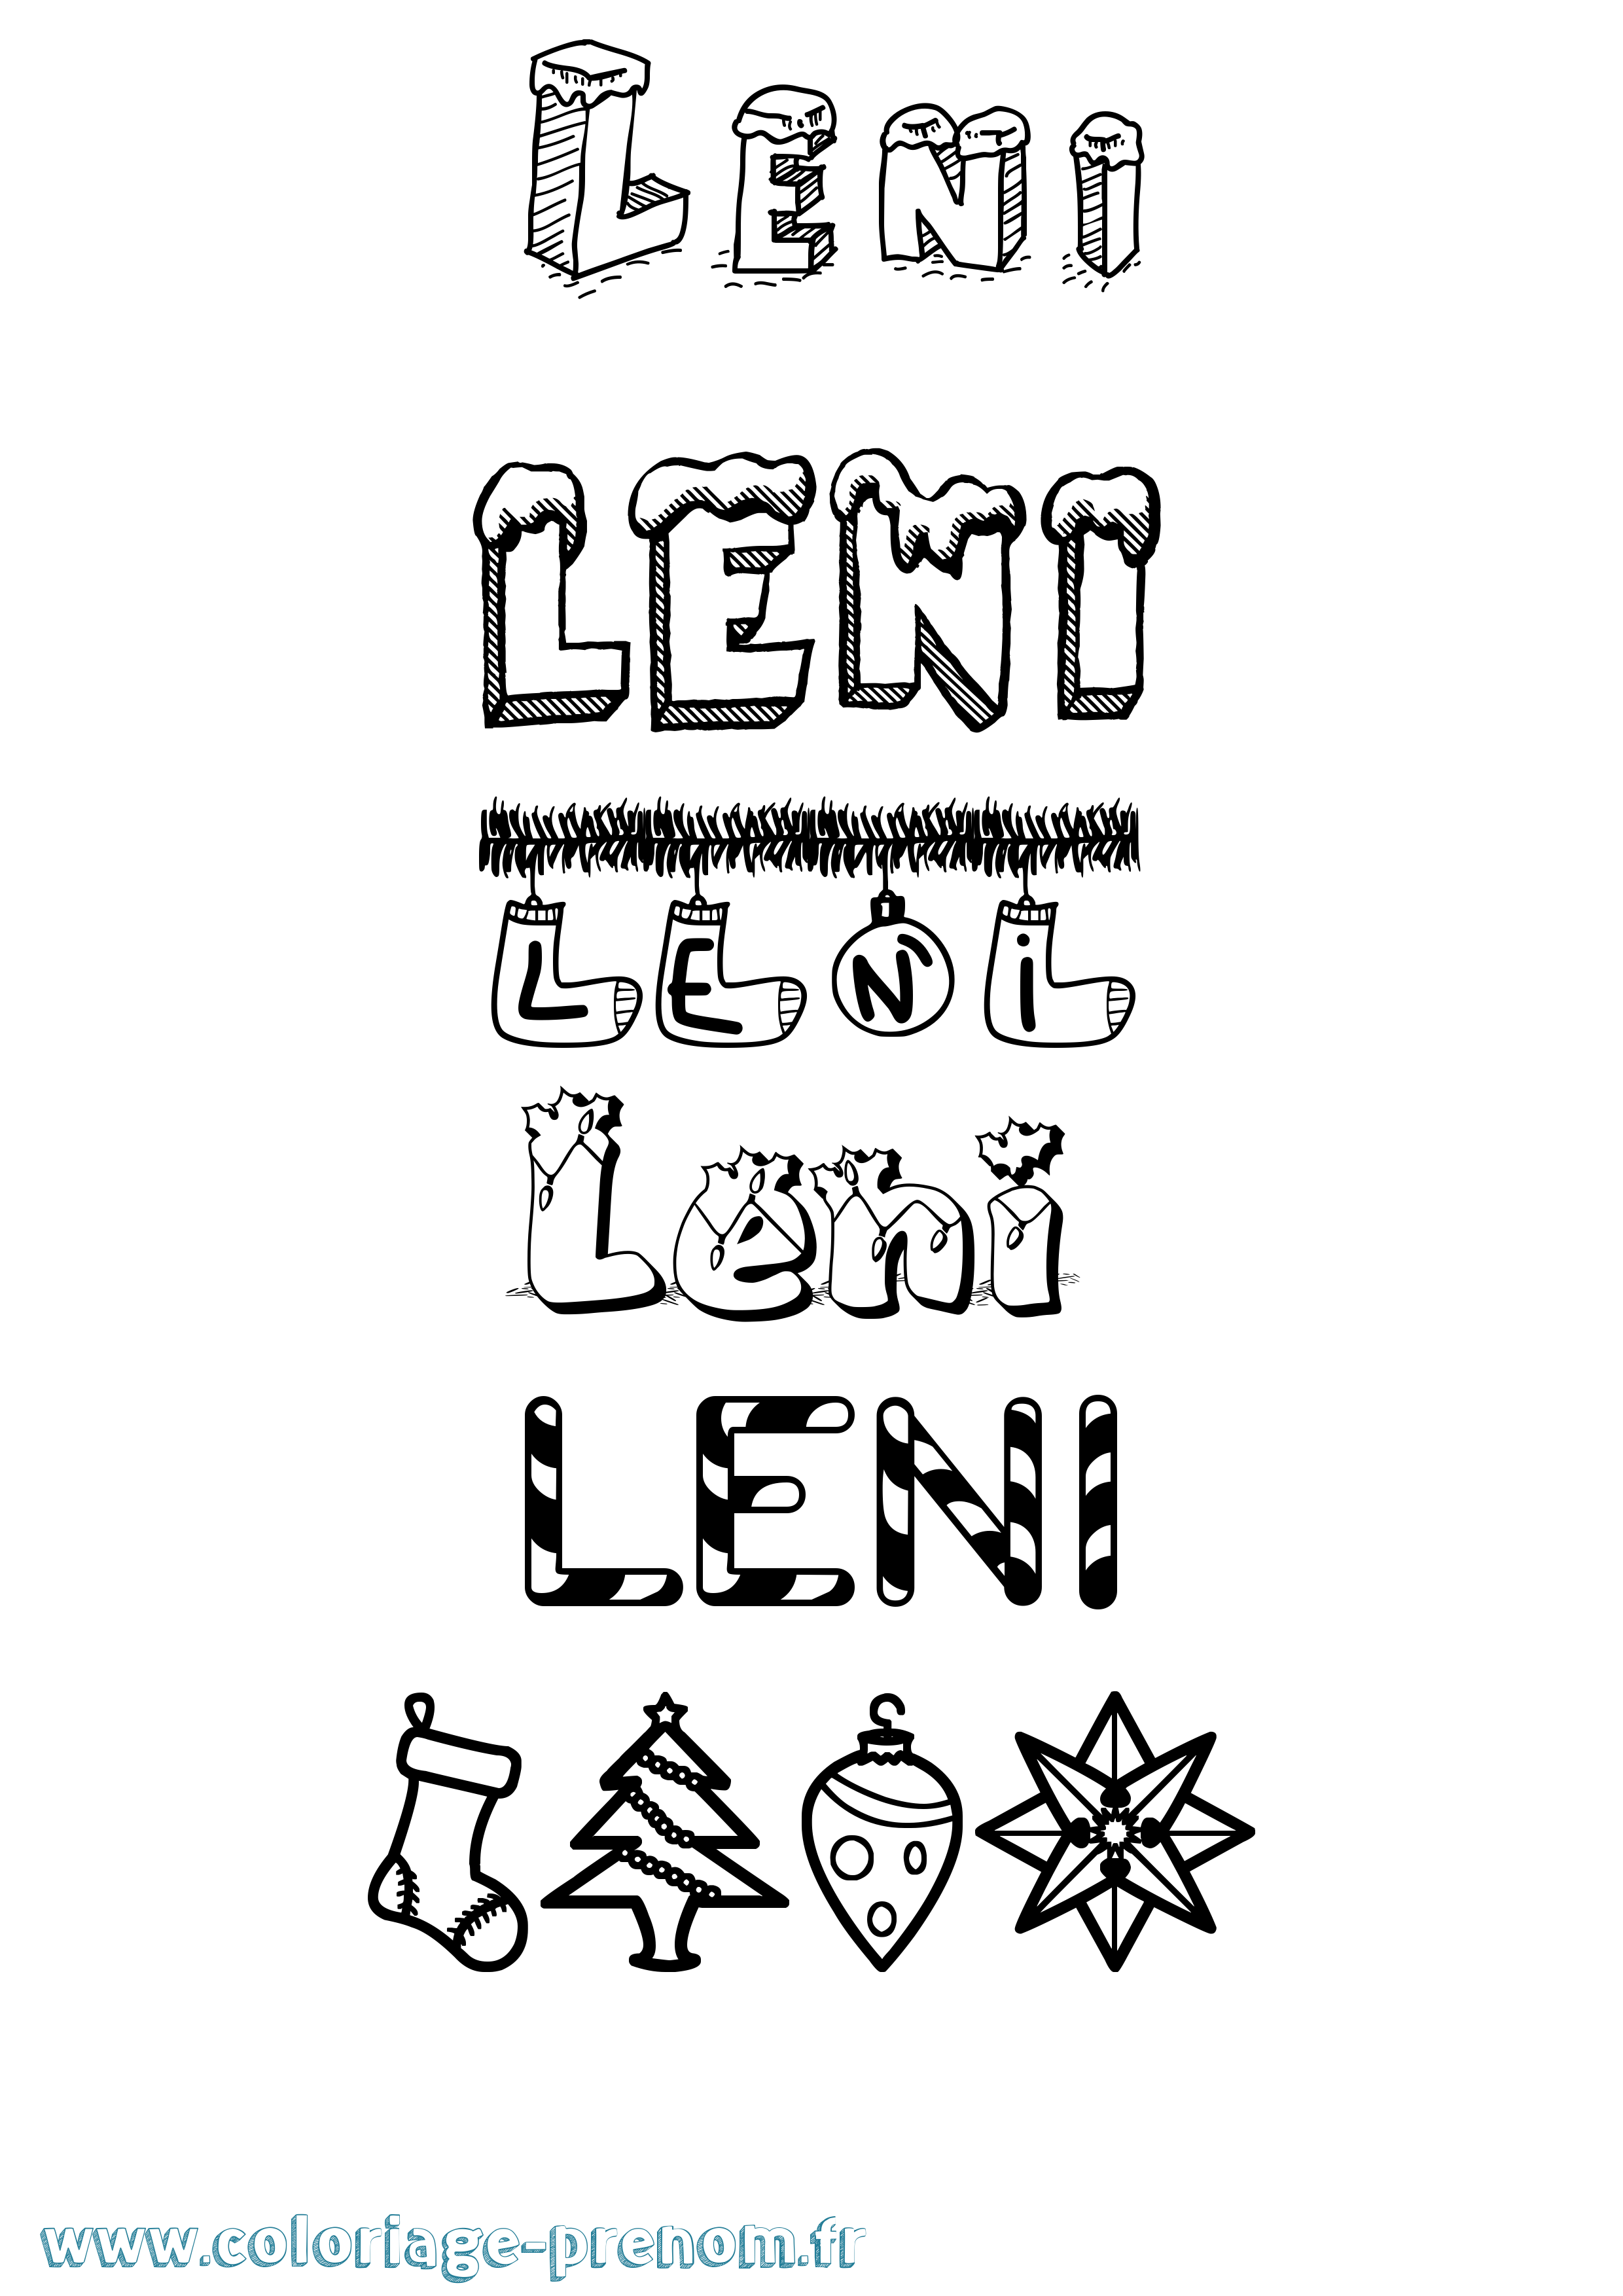 Coloriage prénom Leni